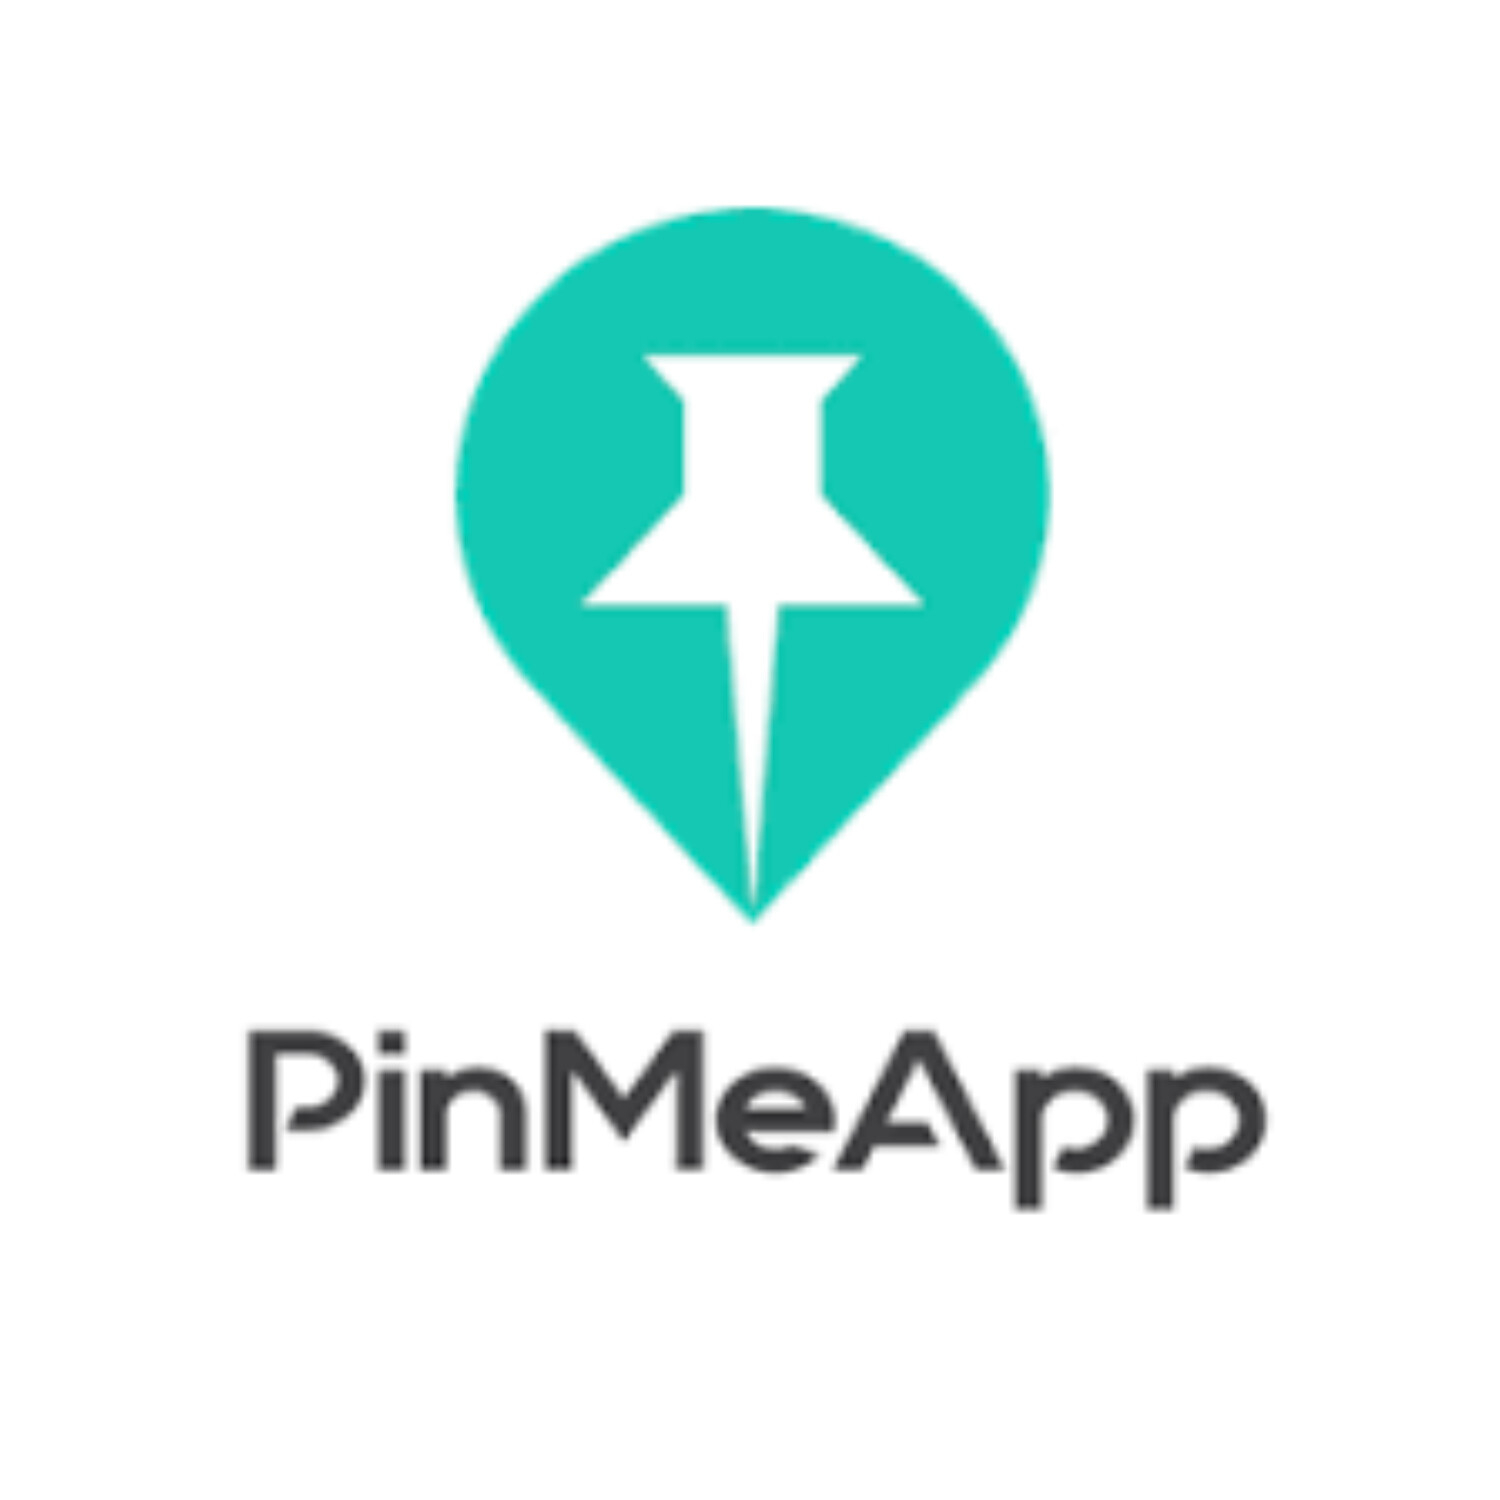 getting rid of the pinme app